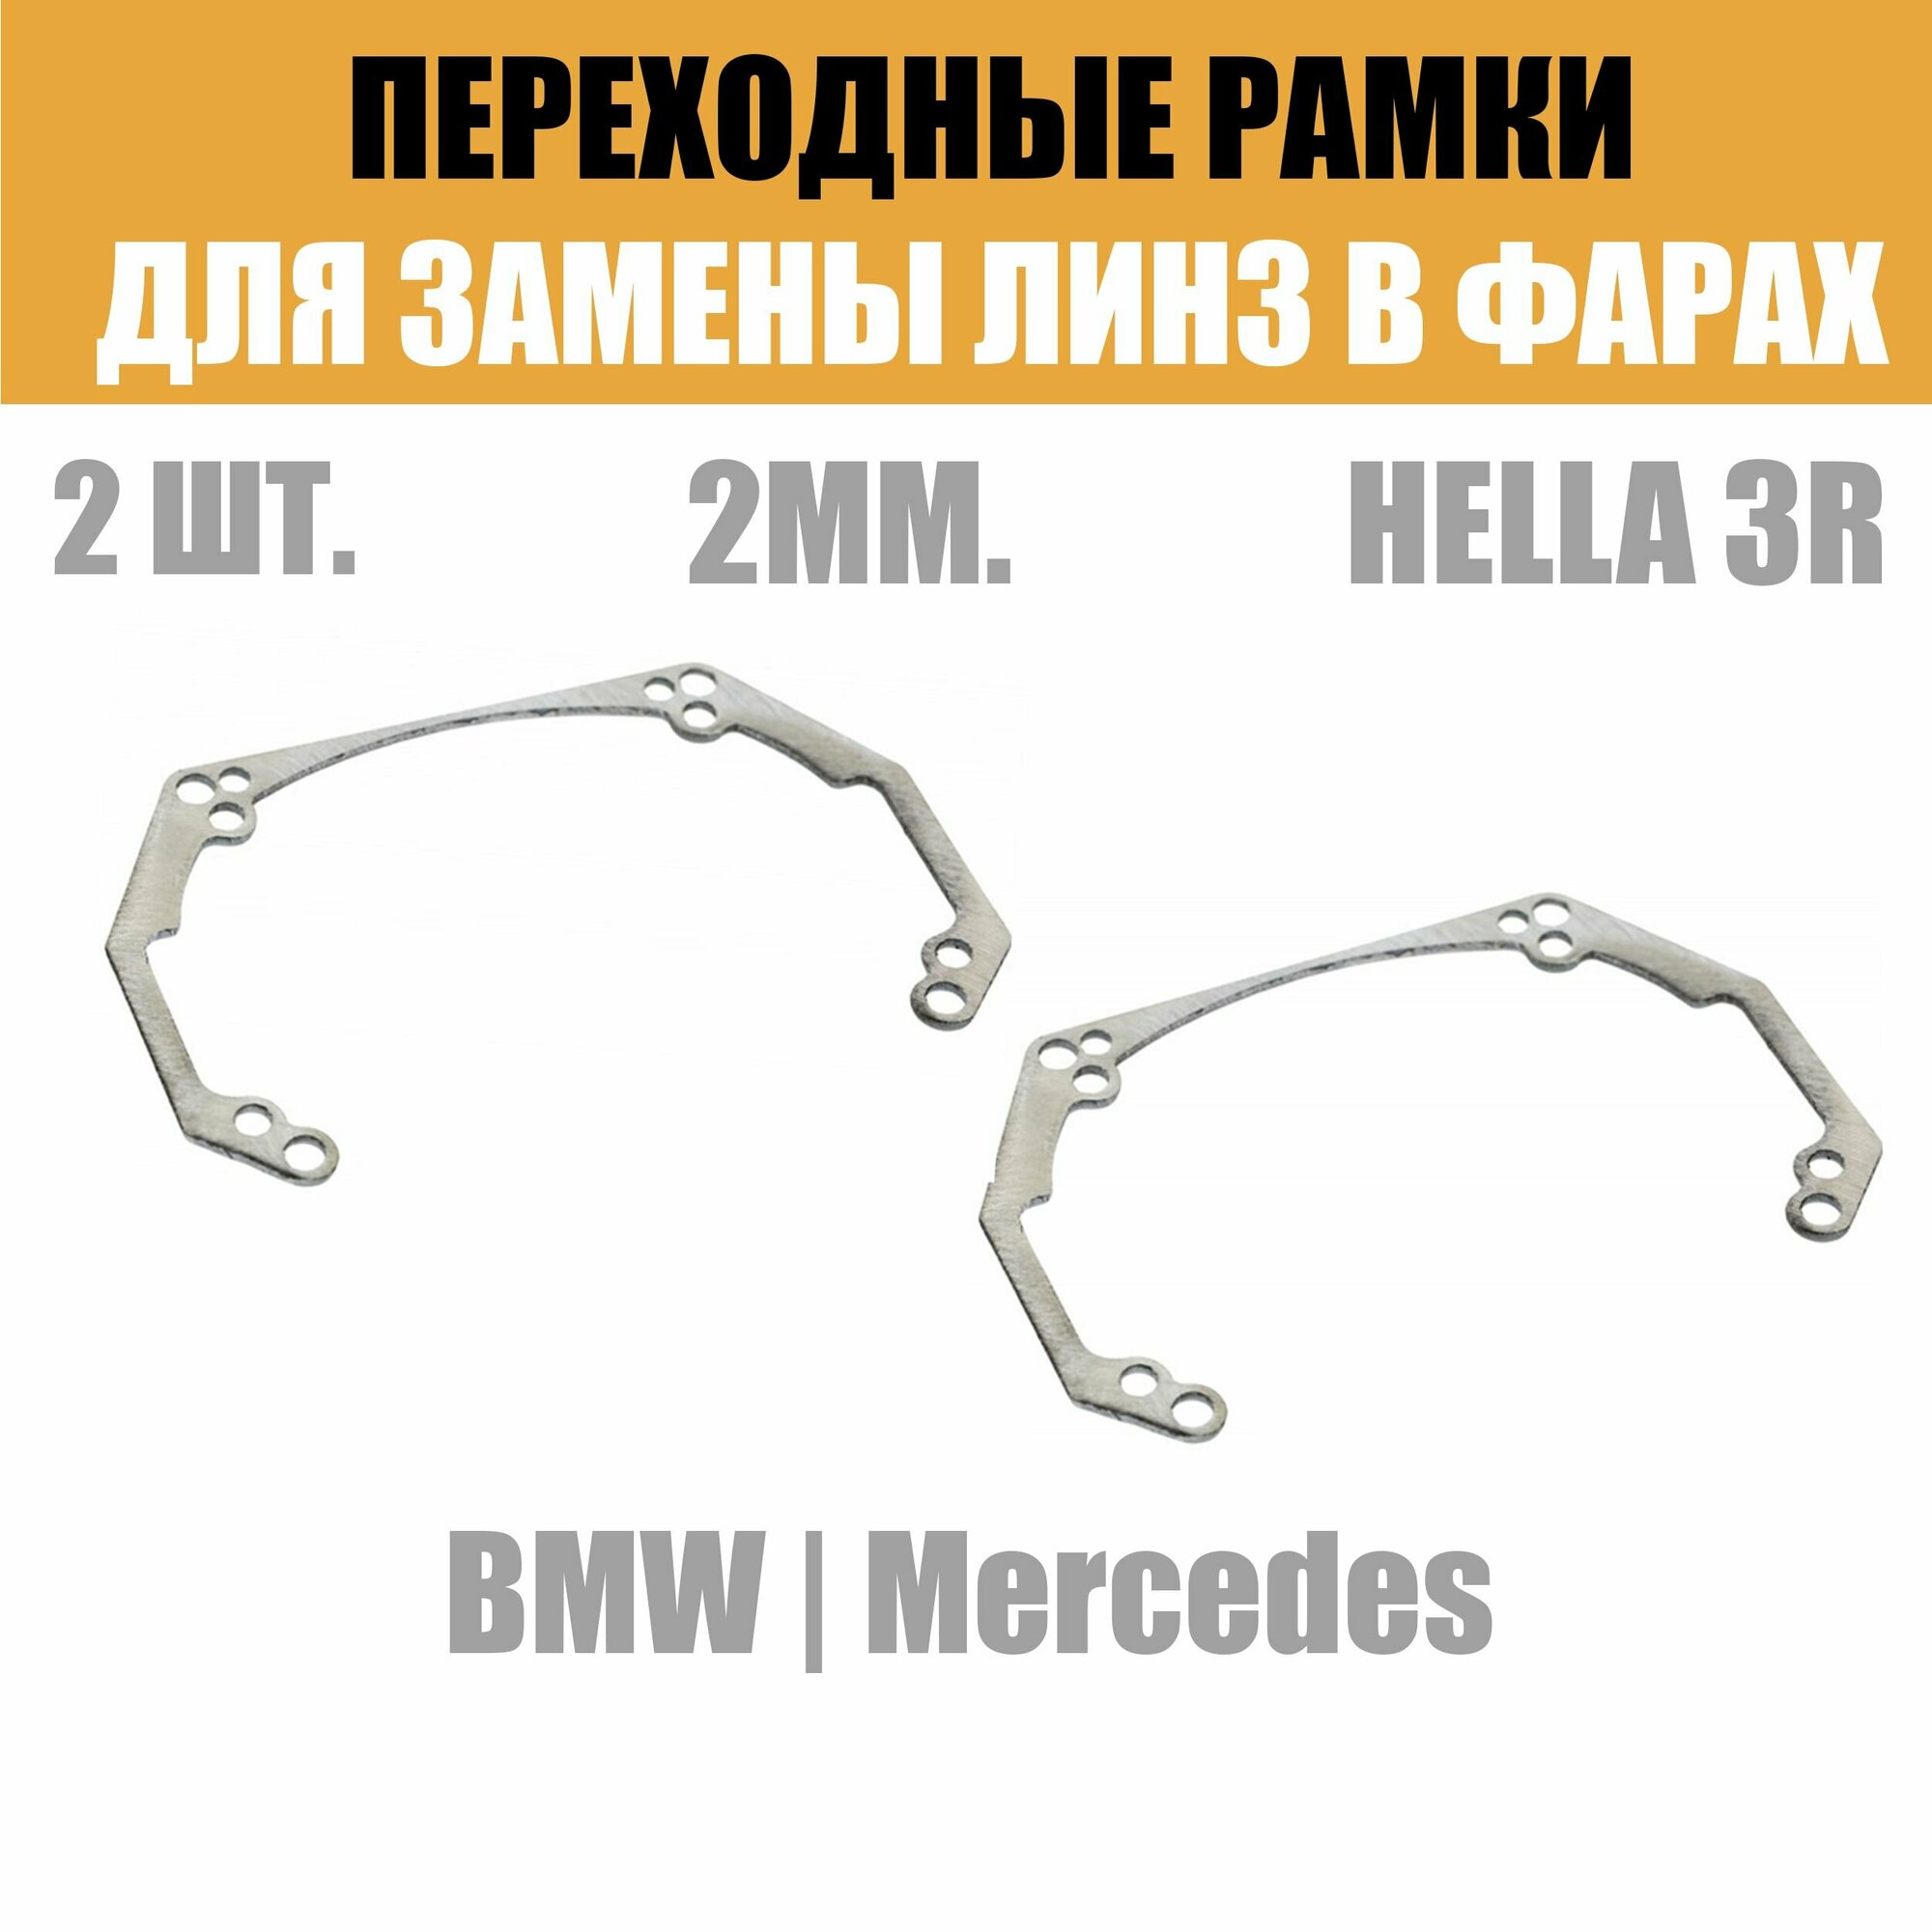 Переходные рамки для линз №41 на BMW 7 F01 F02 (2008 - 2015) под модуль Hella 3R/Hella 3 (Комплект 2)